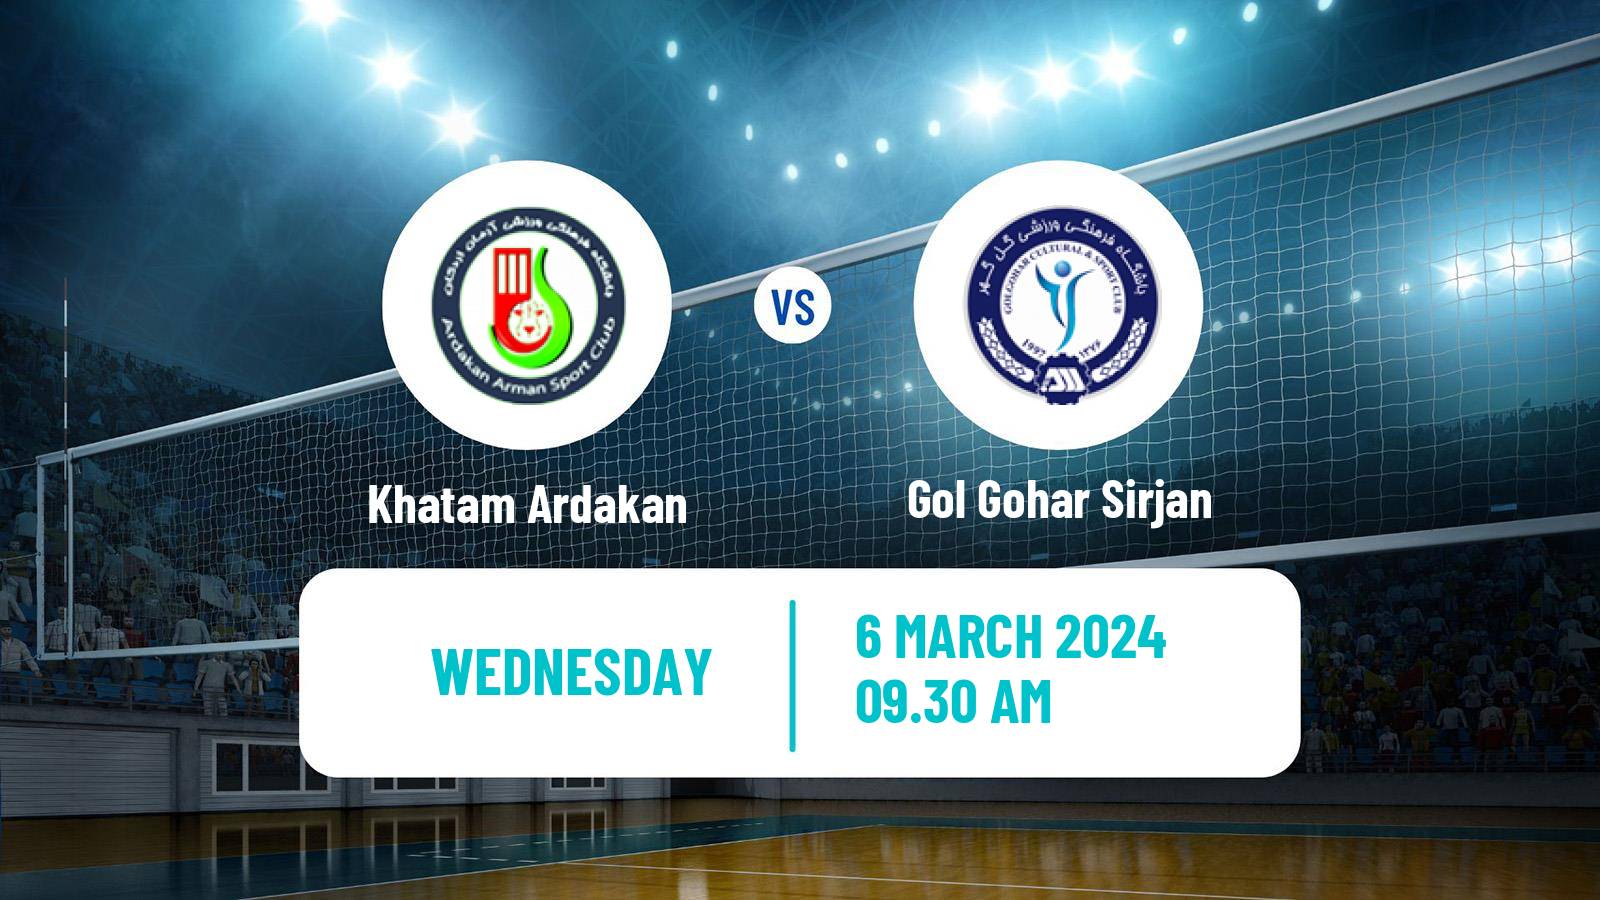 Volleyball Iran Super League Volleyball Khatam Ardakan - Gol Gohar Sirjan